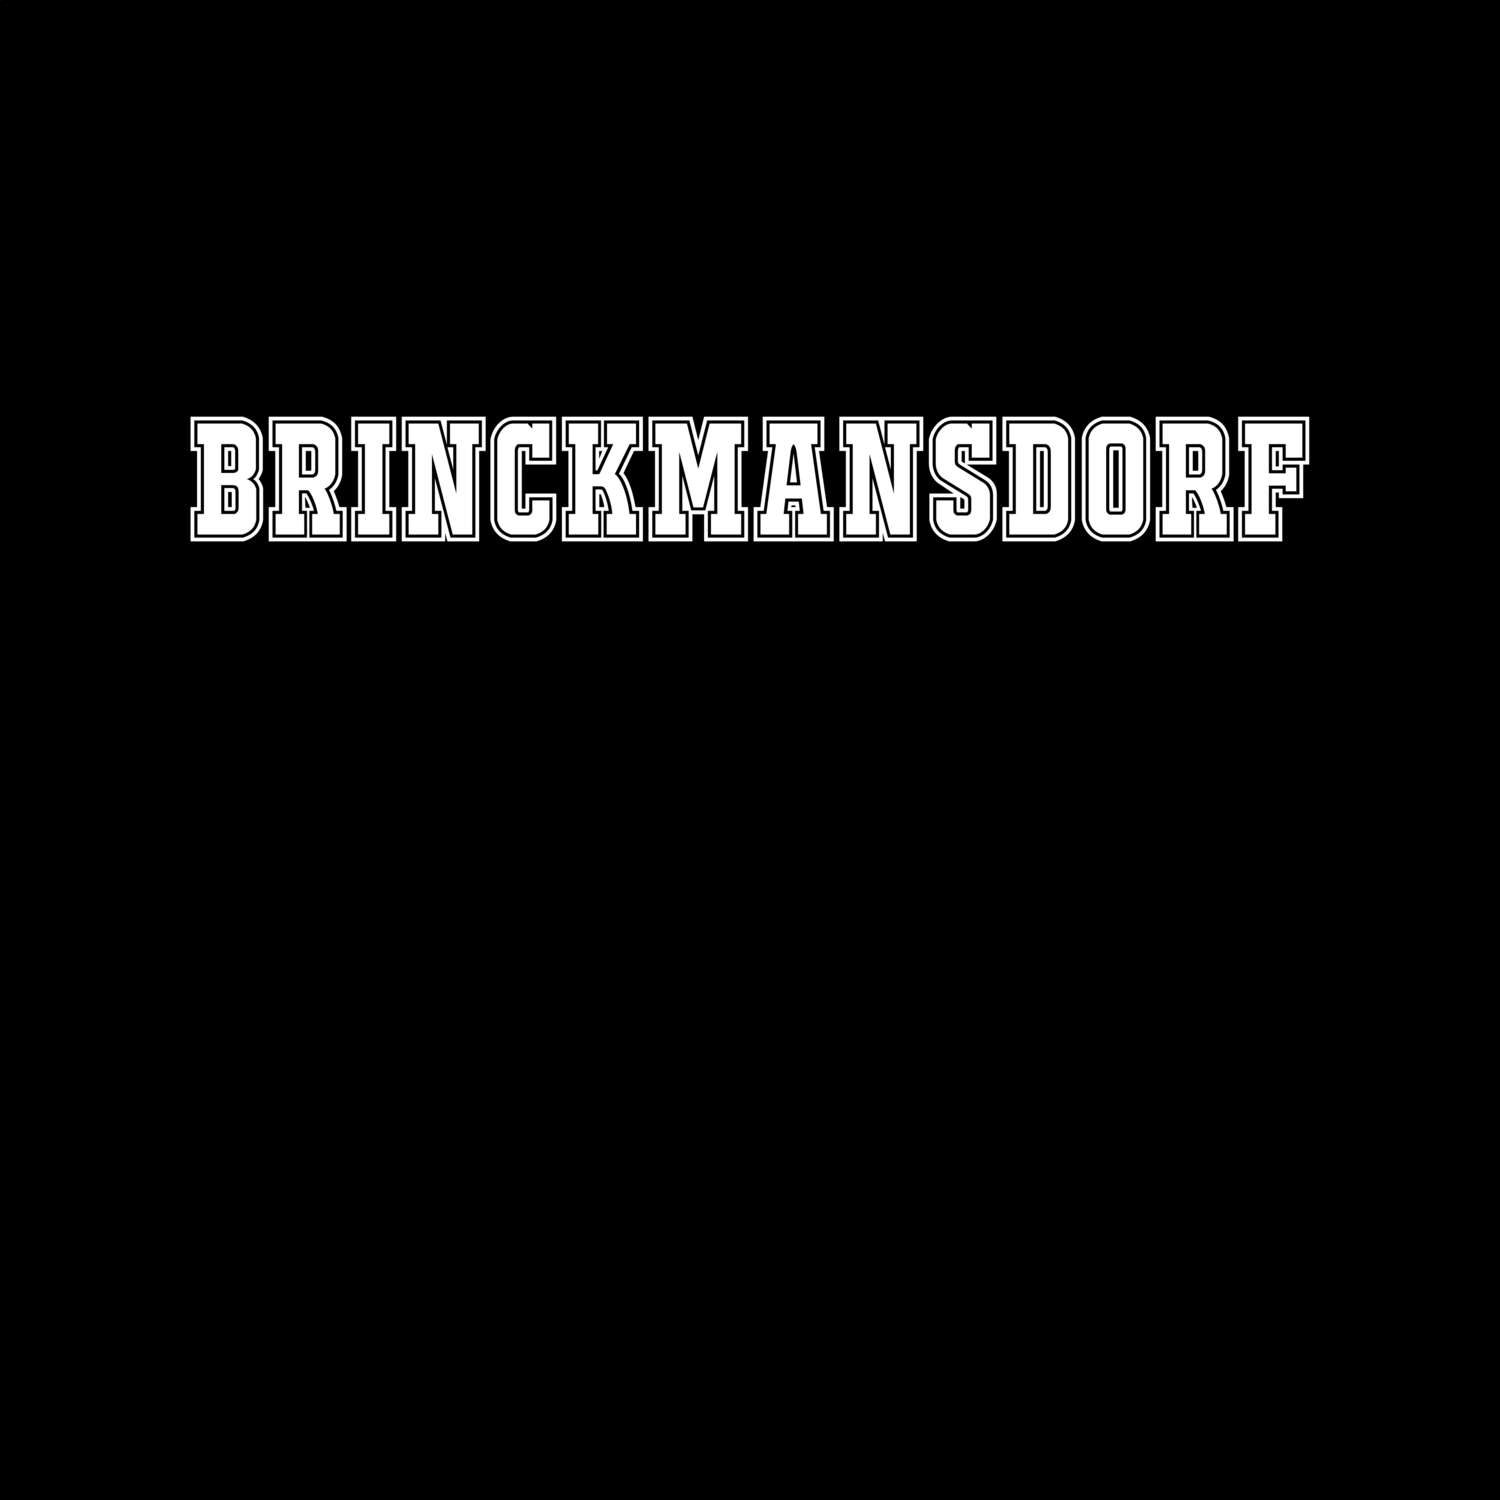 Brinckmansdorf T-Shirt »Classic«